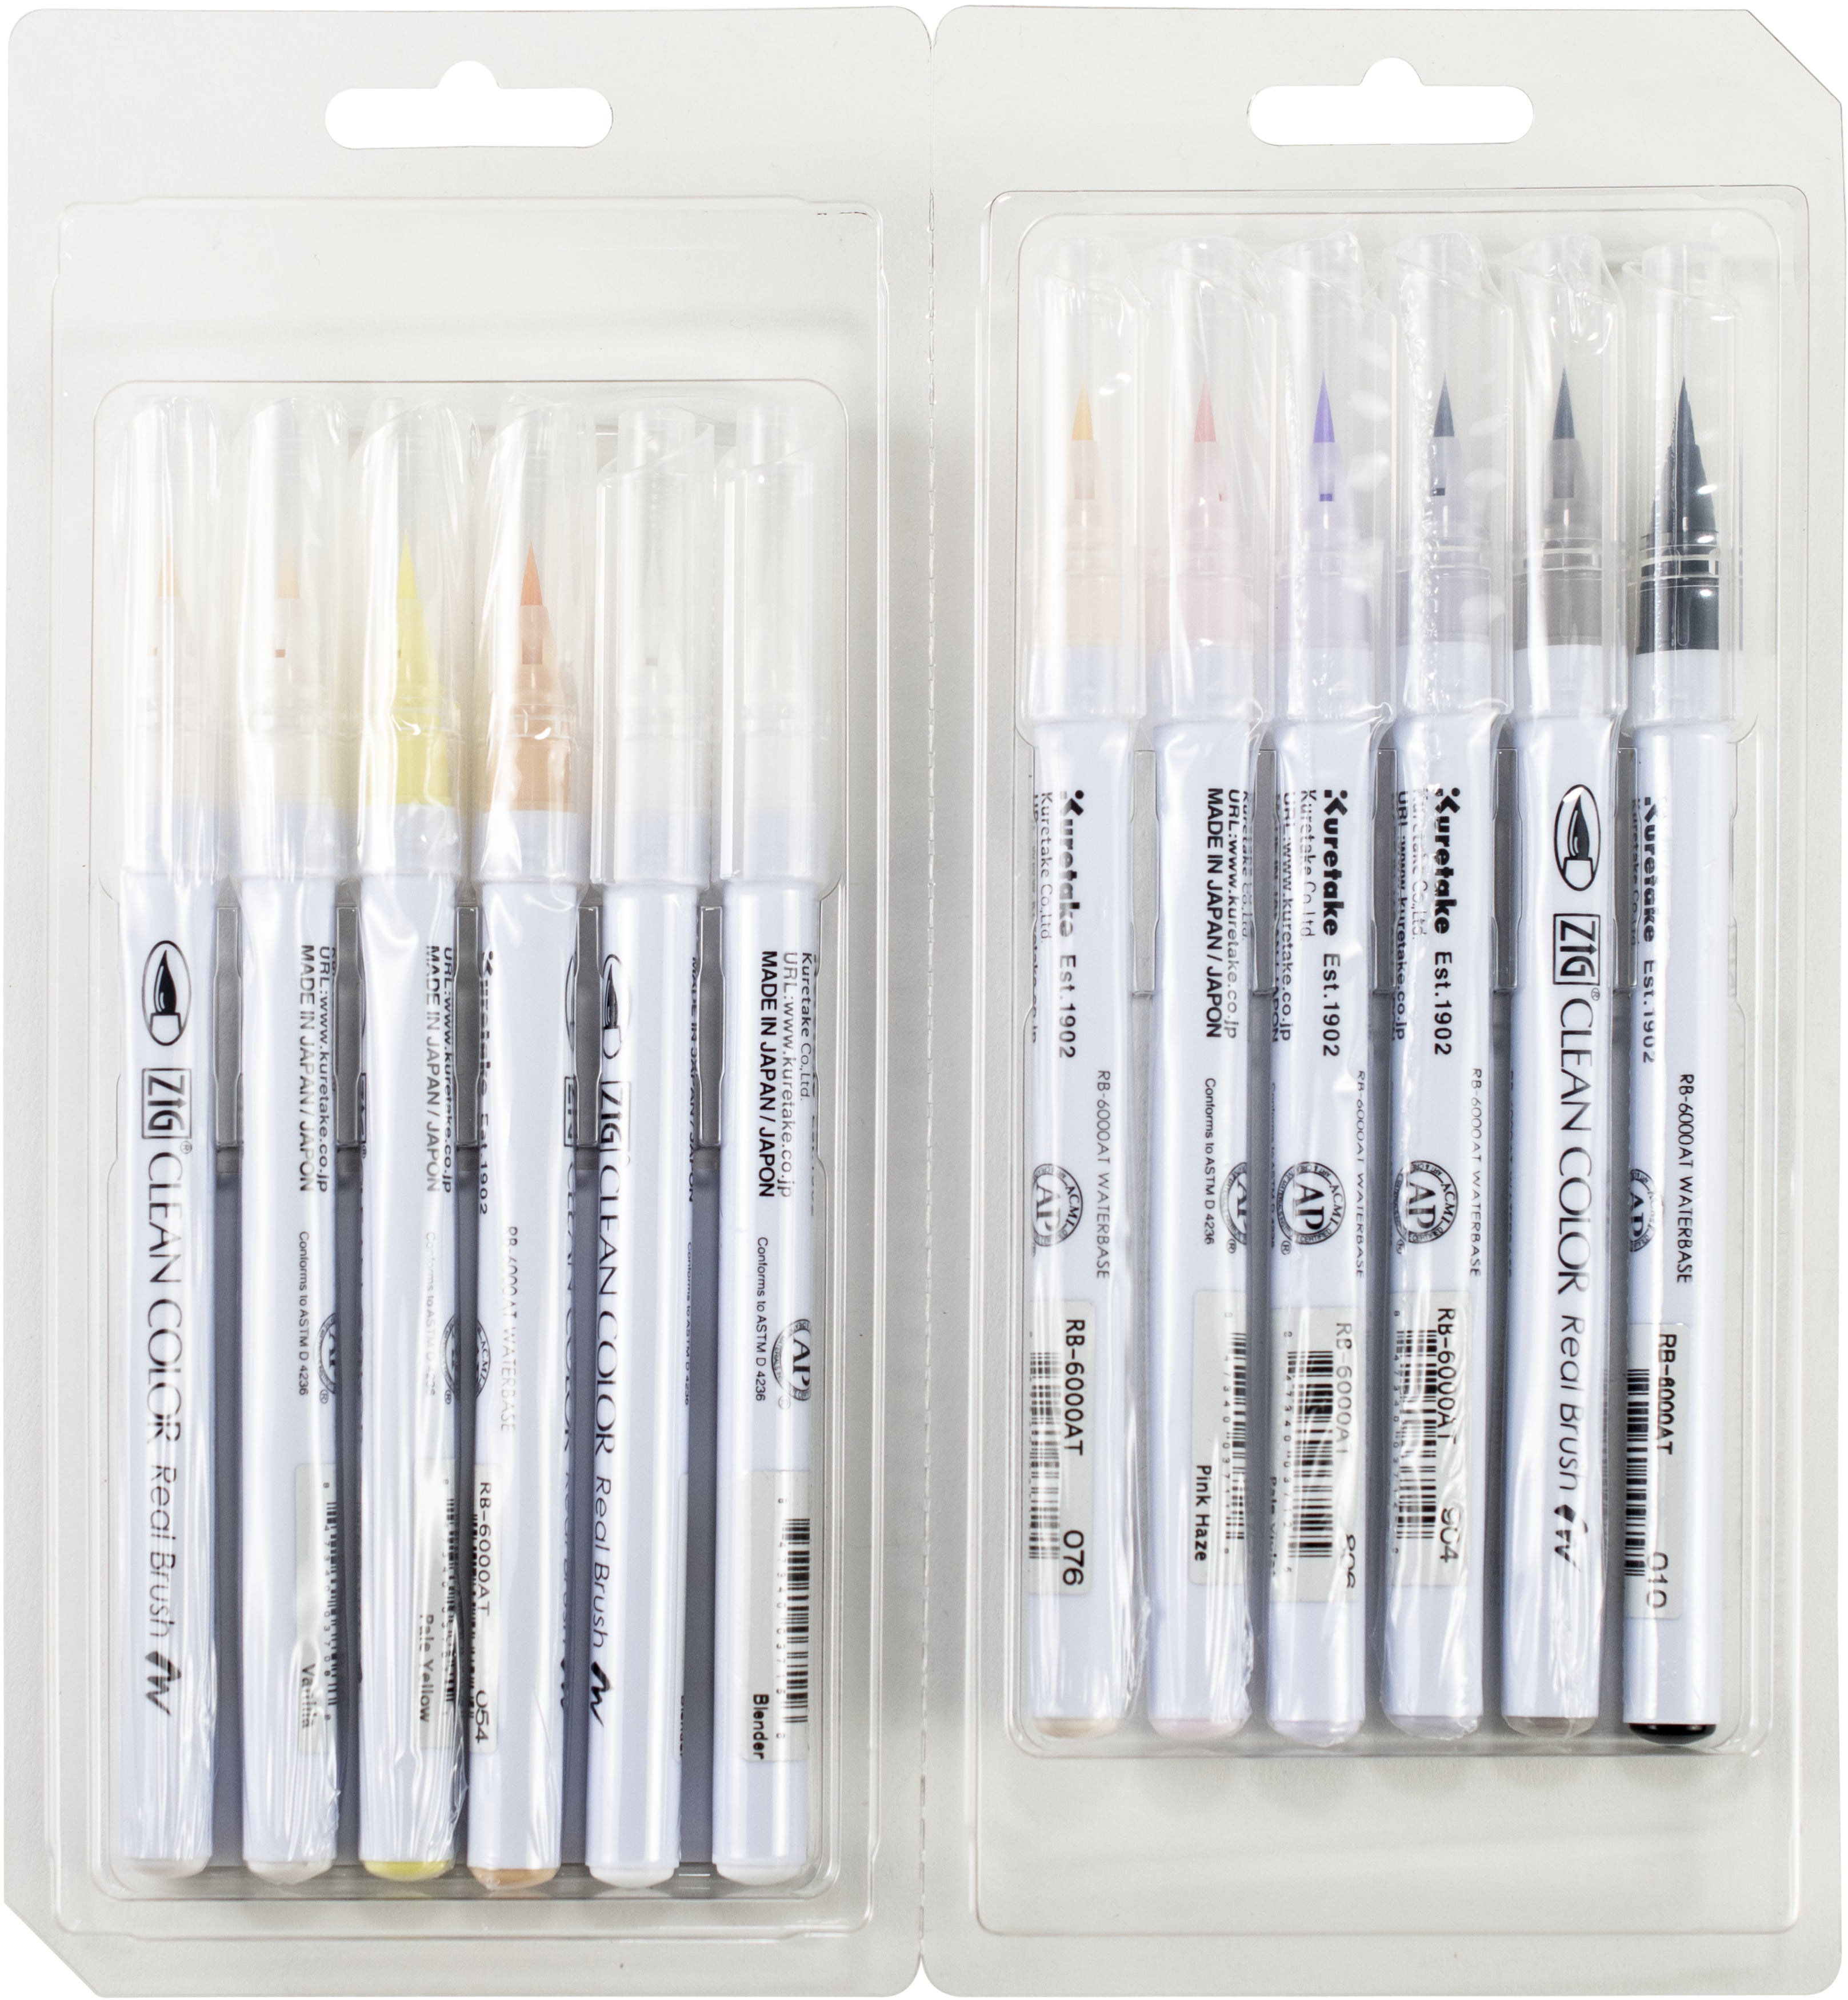 Dupe or Dud: Kuretake Clean Color Real Brush Markers vs Artist Loft Brush  Markers – Pretty Prints & Paper